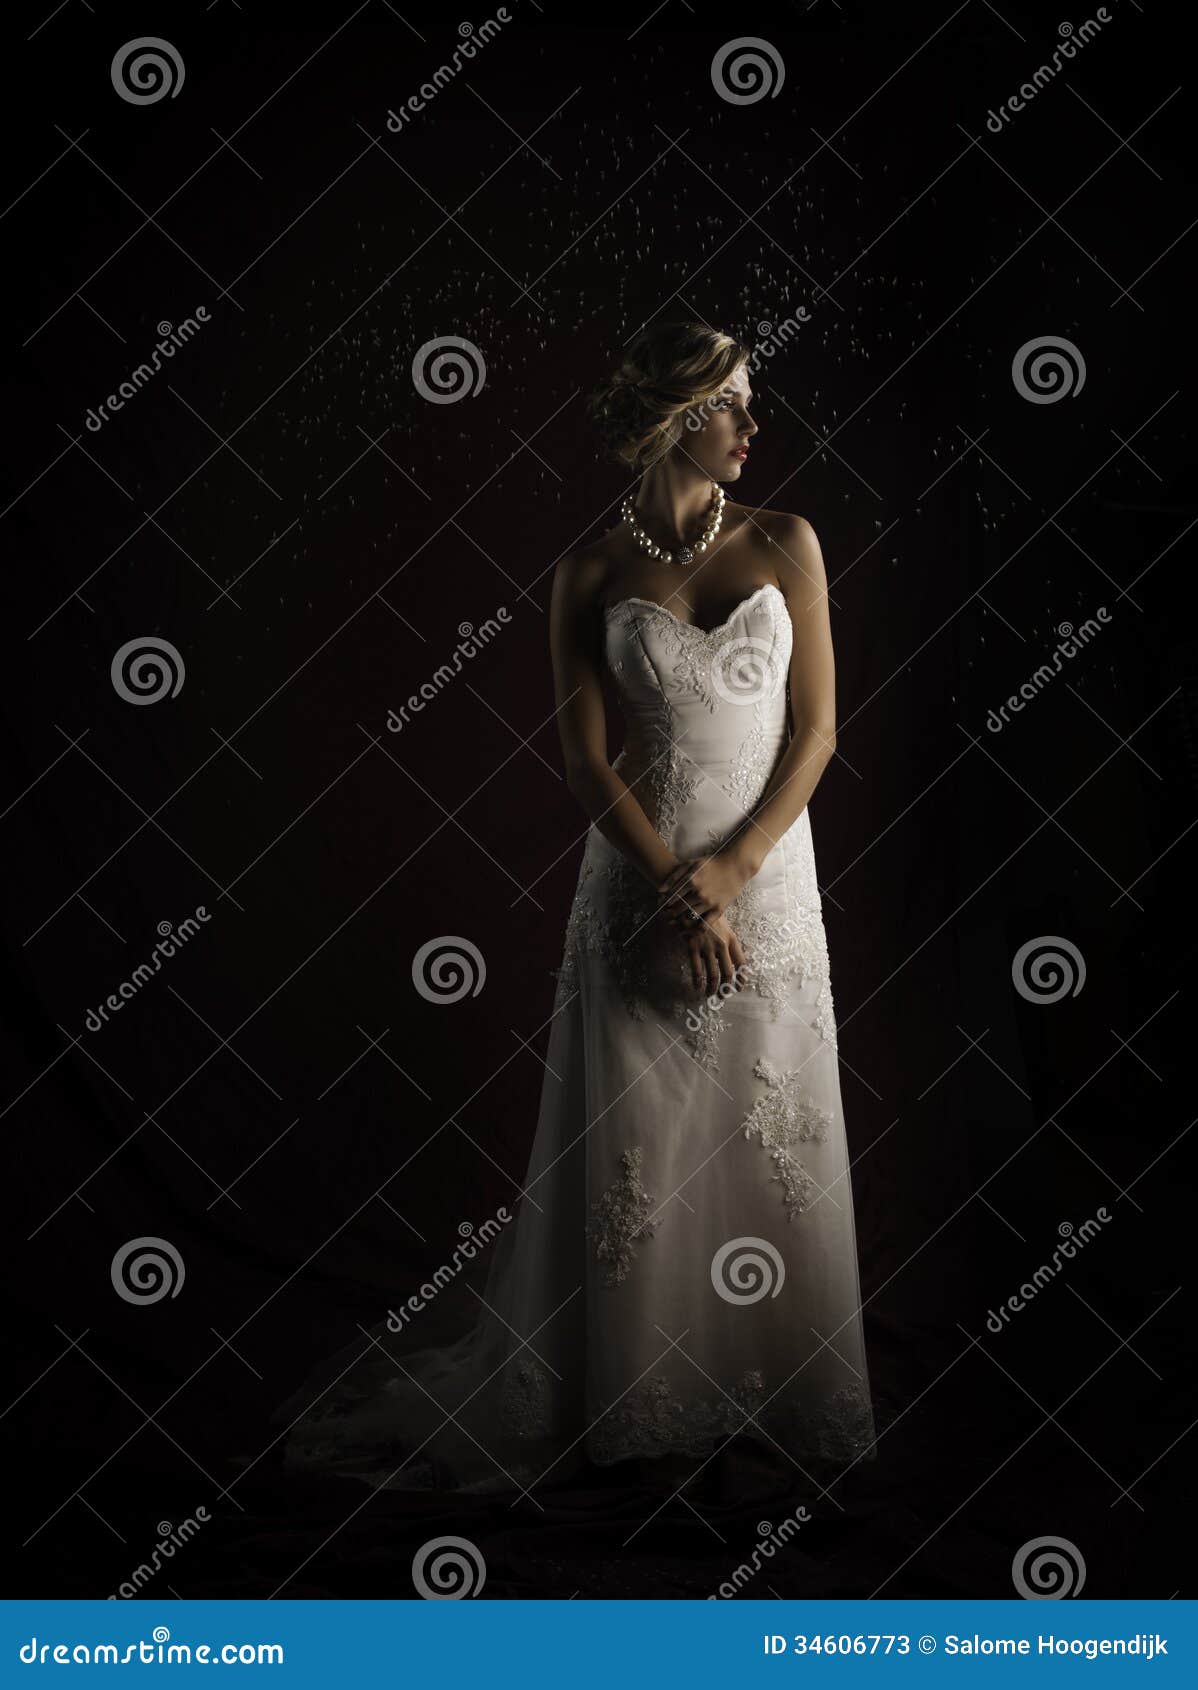 beautiful blonde bride wearing vintage strapless wedding gown standing in the rain